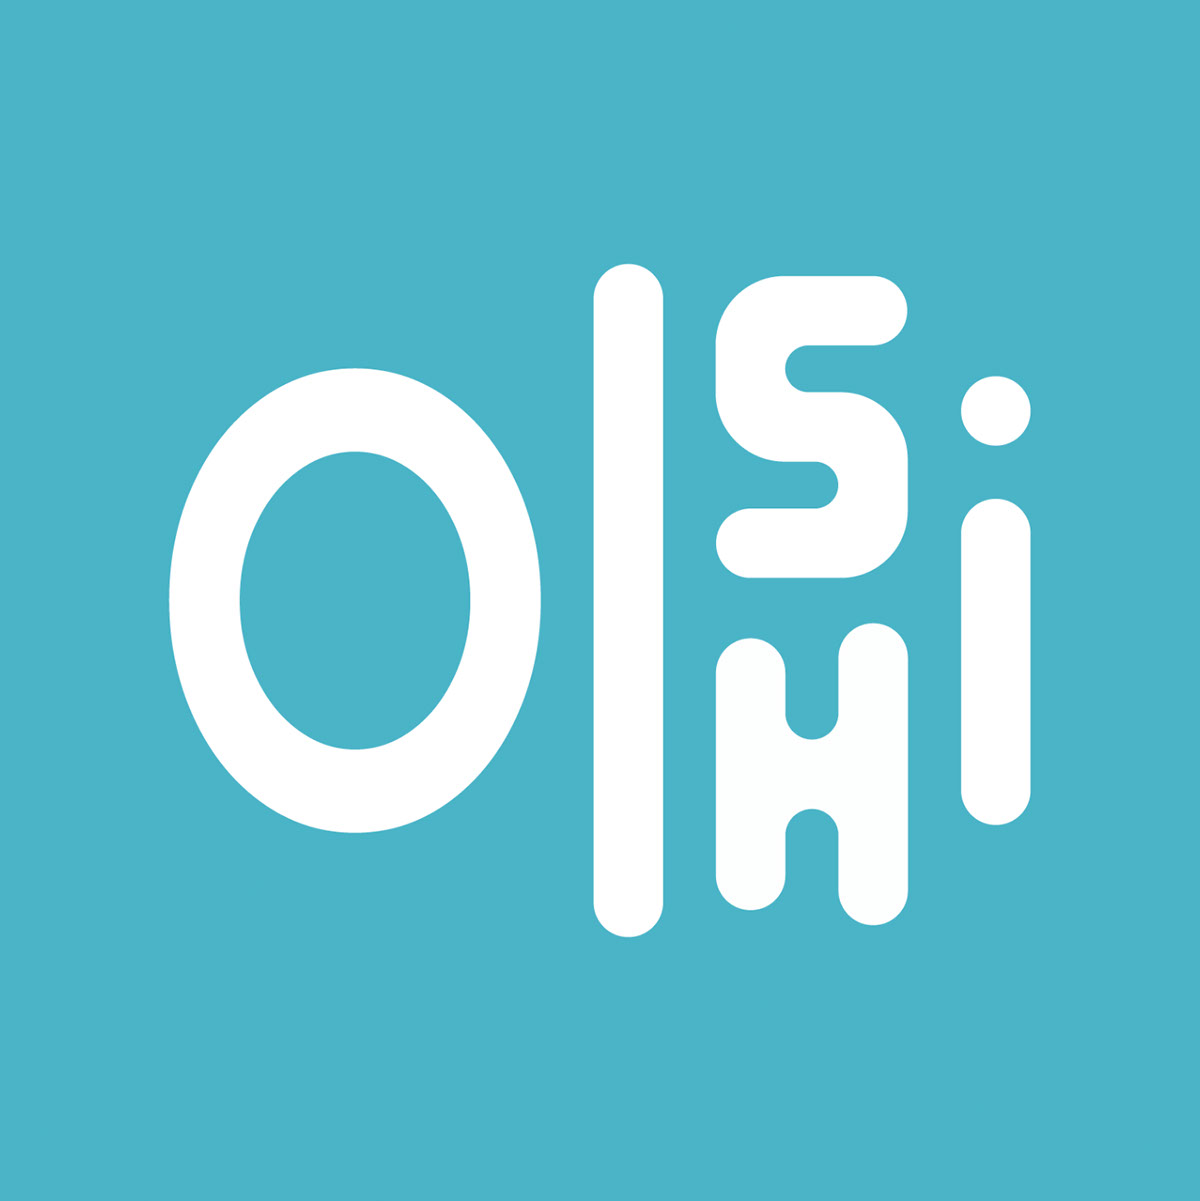 Oishi Hangeul Rounded rendition image